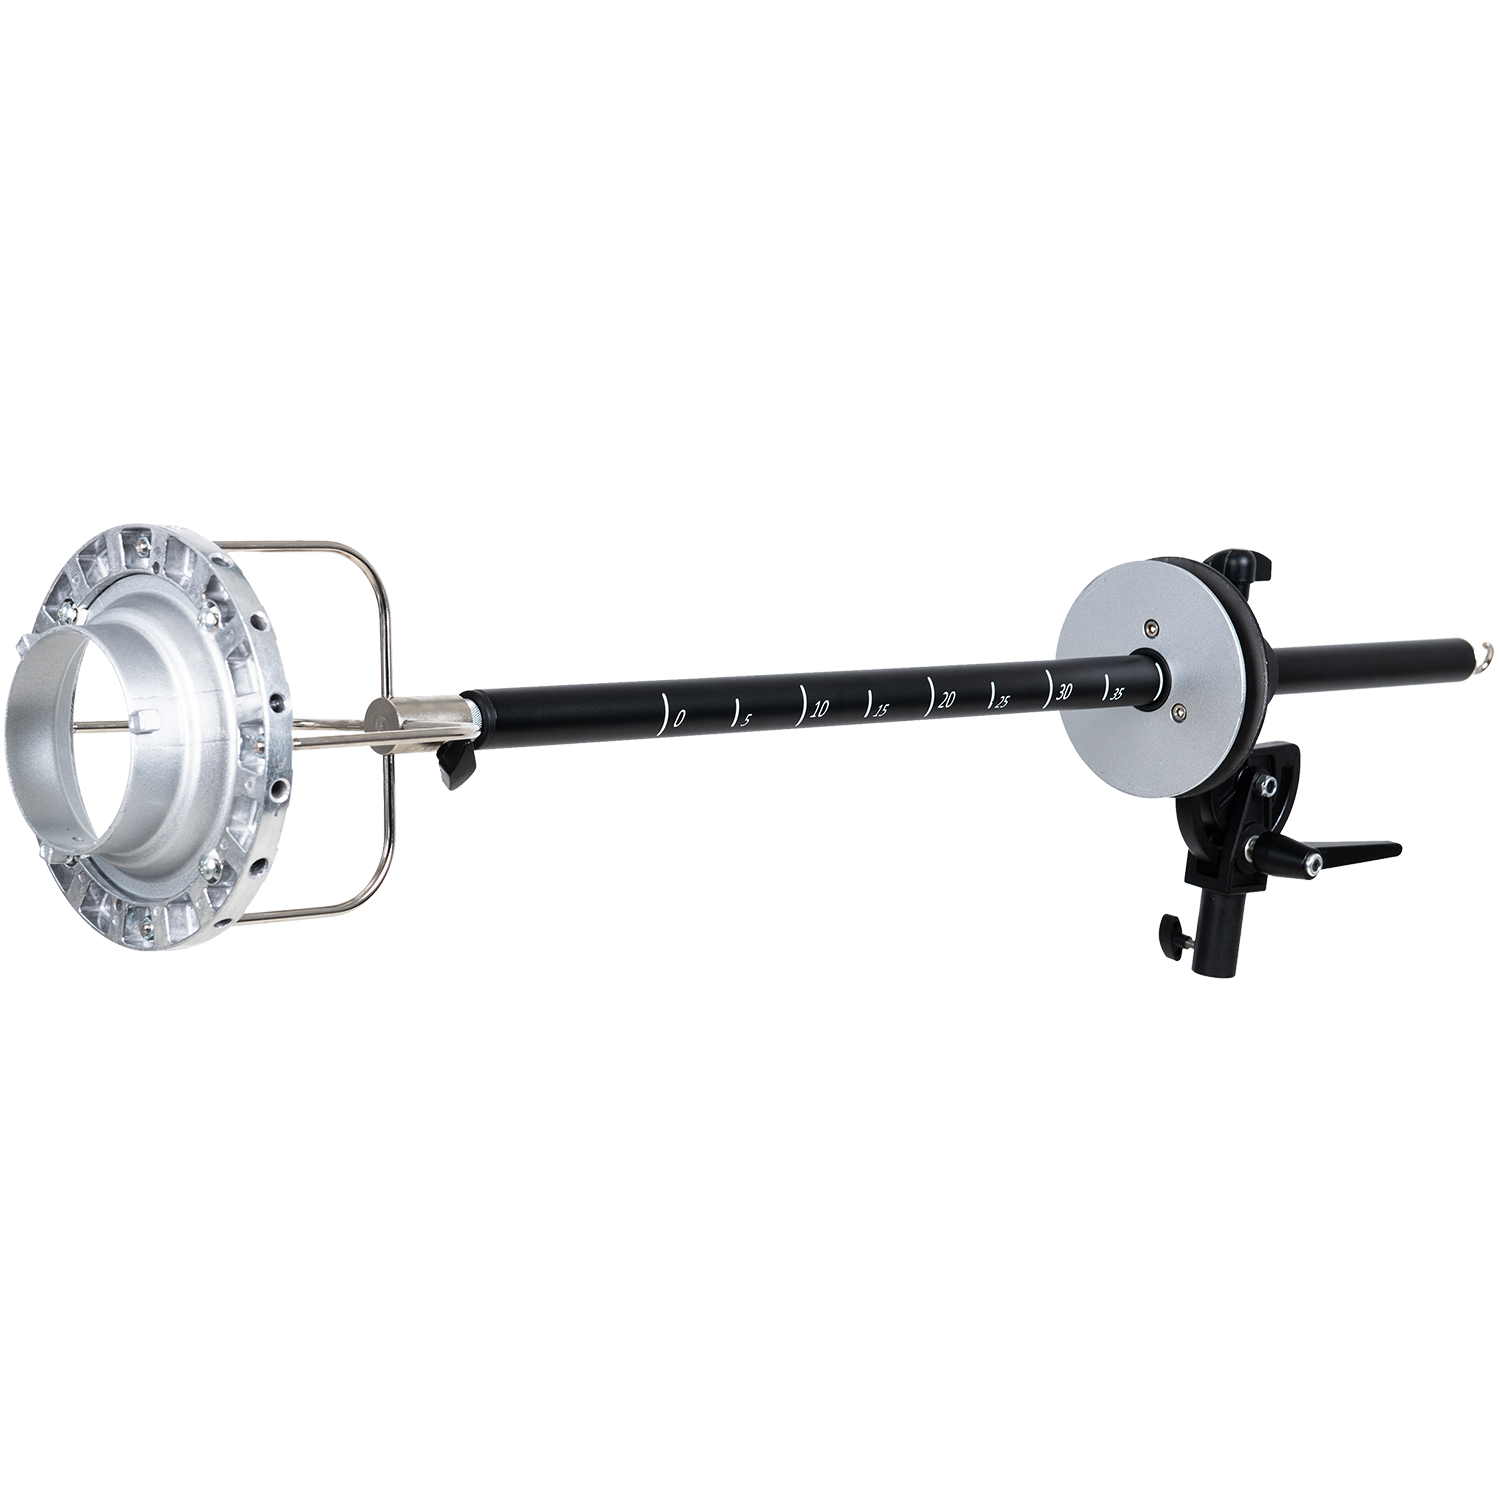 TD-180 Deep Fokus Schirm 180 cm mit Zoom-Fokus-System